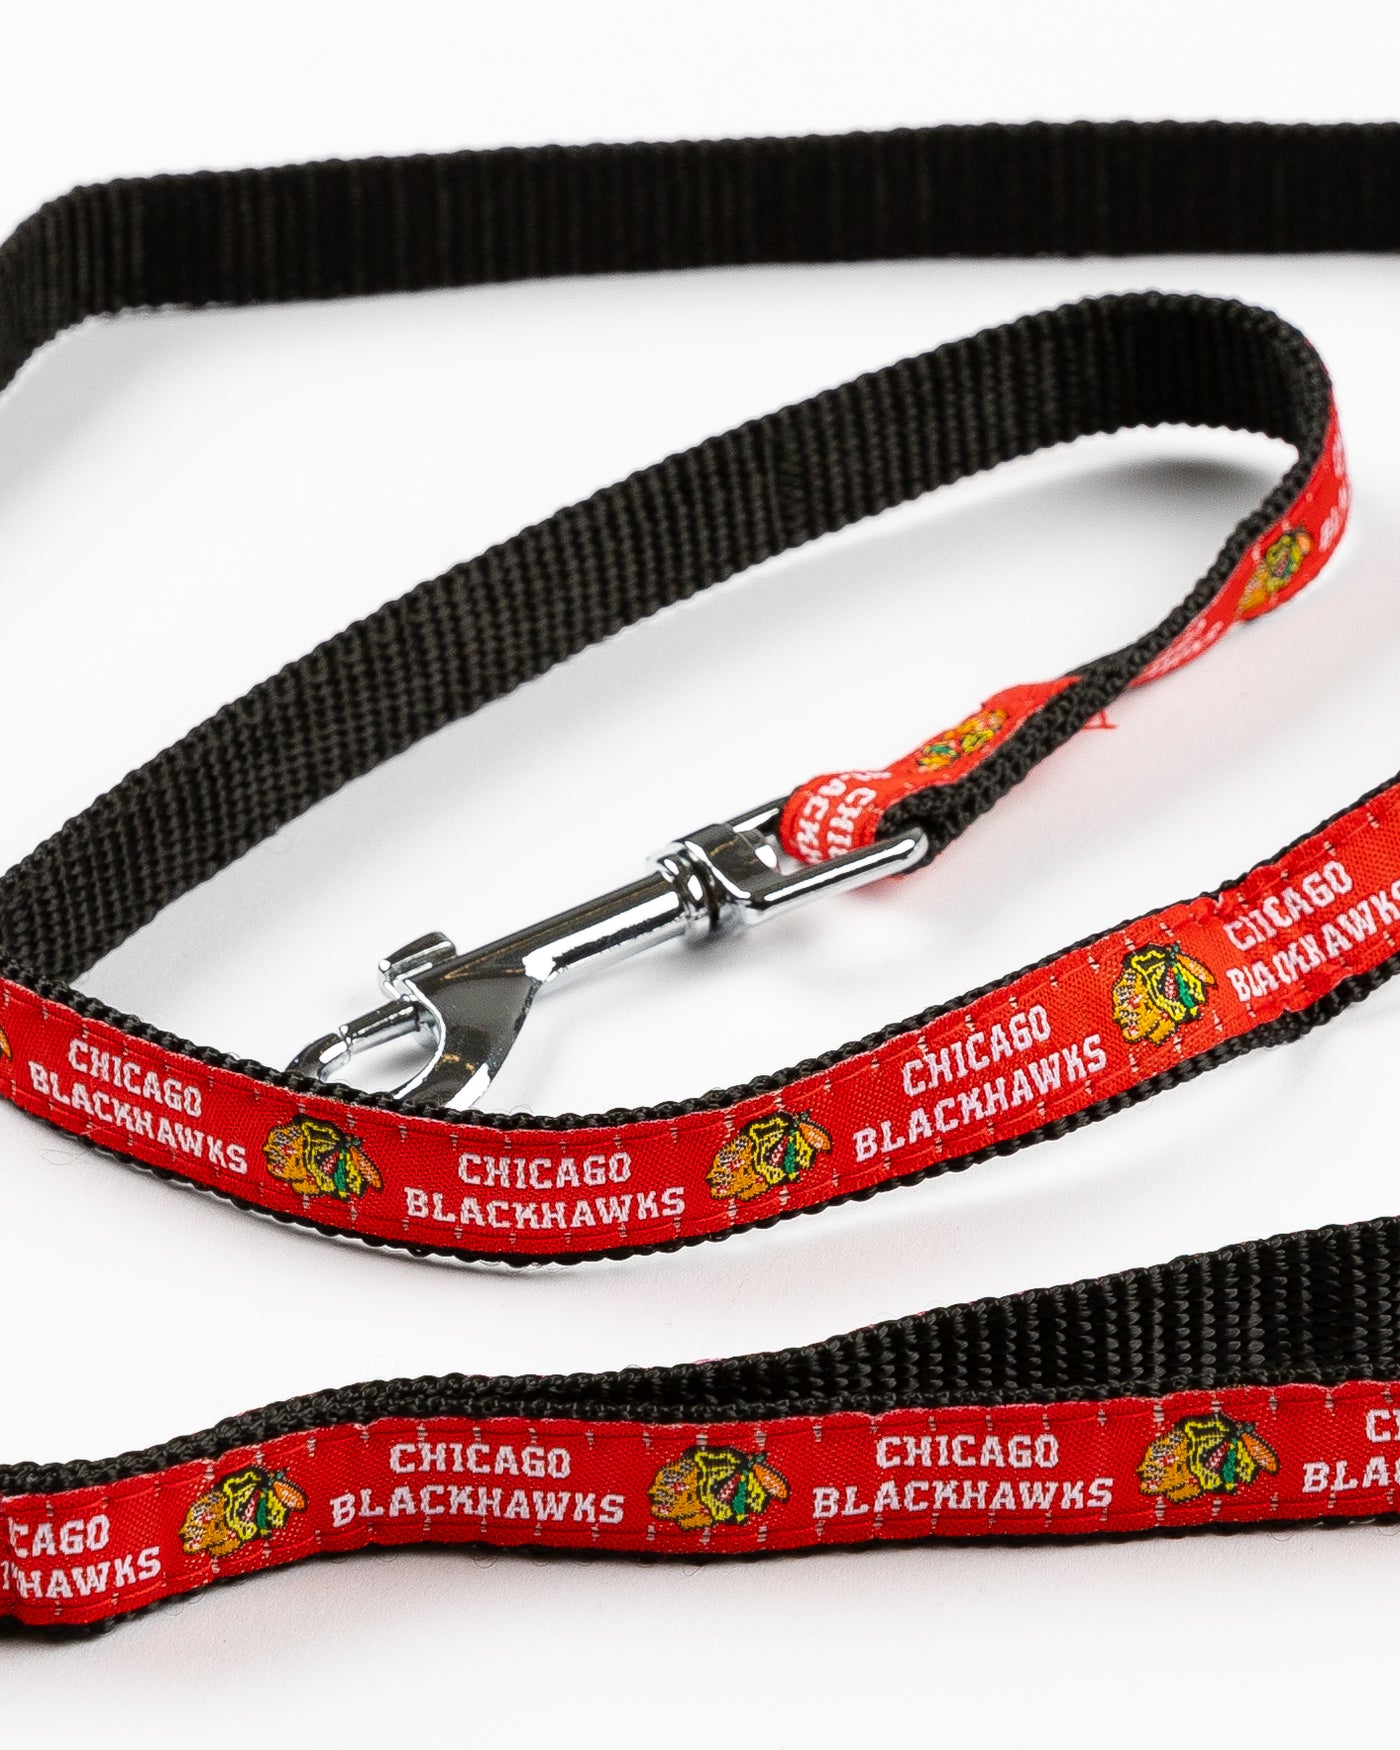 red Chicago Blackhawks pet leash - detail lay flat